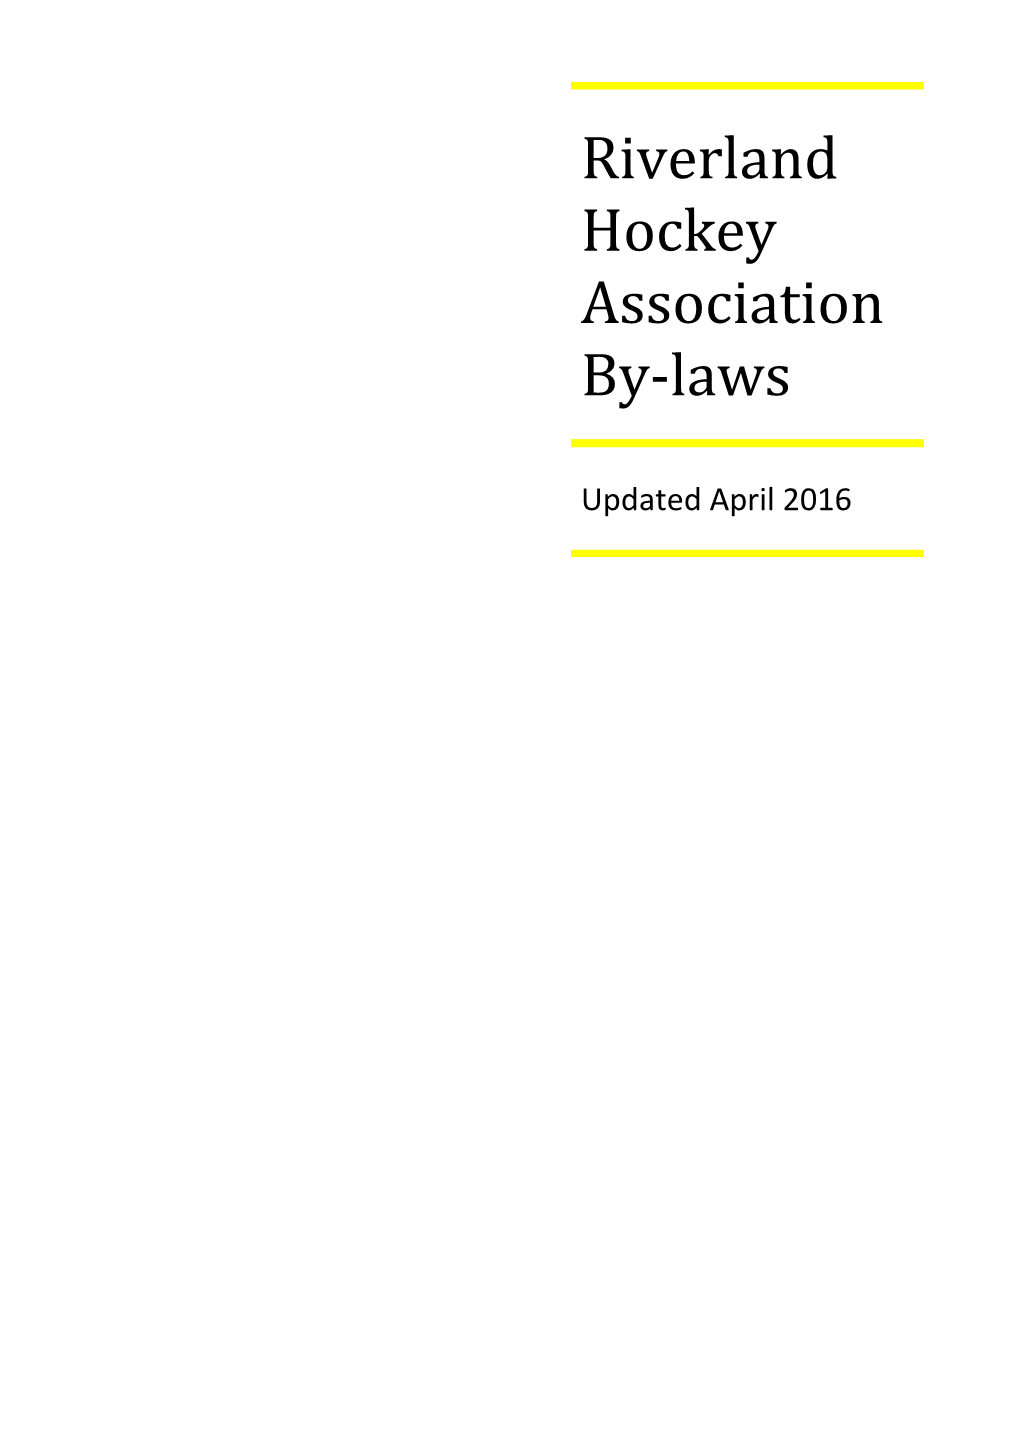 Riverland Hockey Association By-Laws